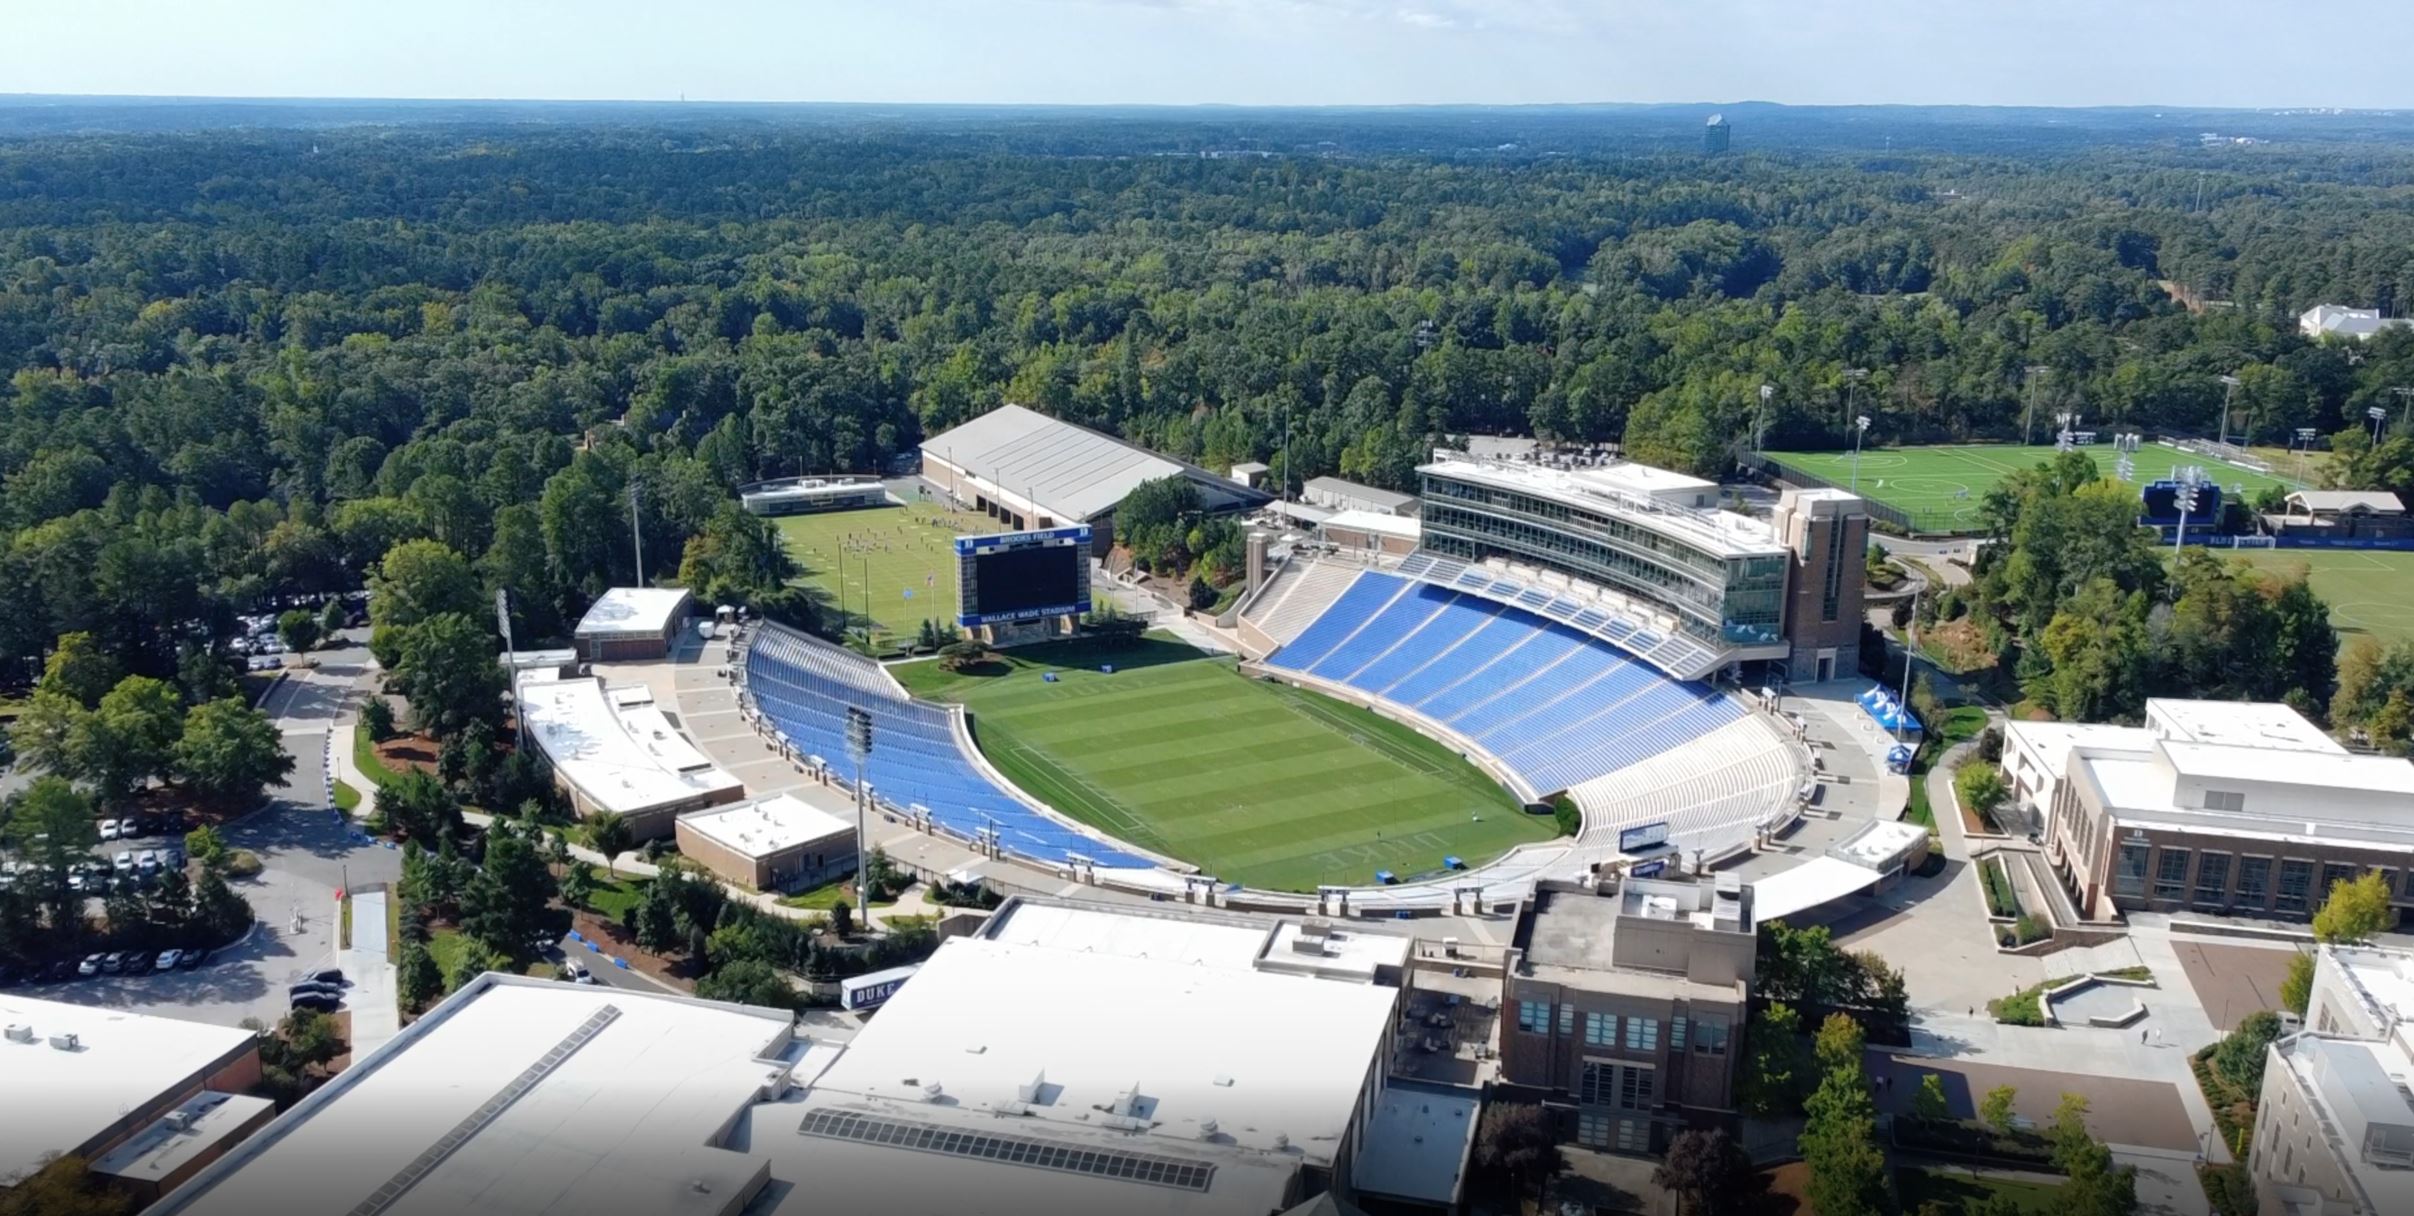 Drone picture of Duke university's stadium